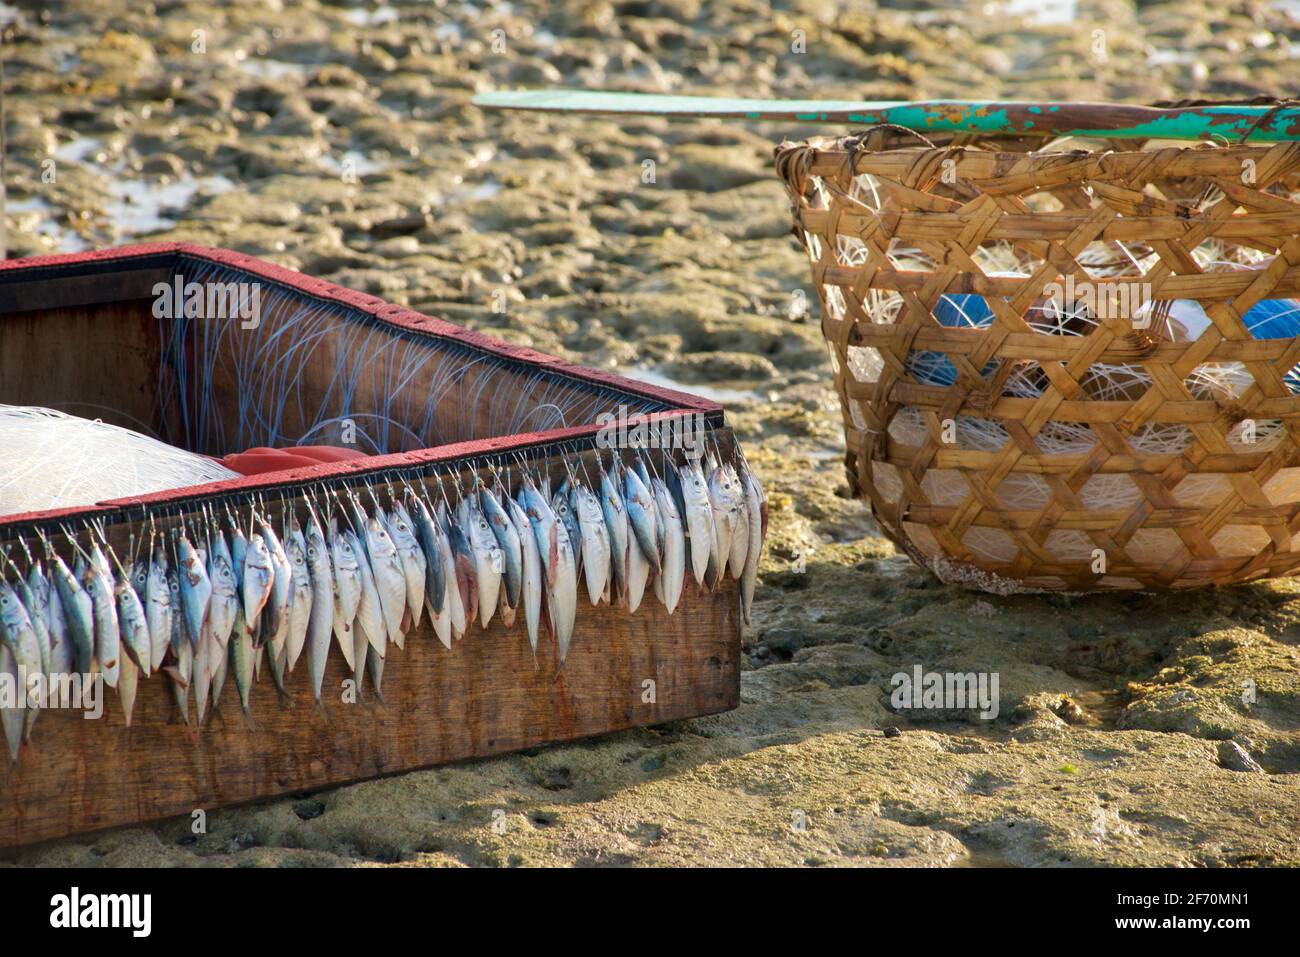 https://c8.alamy.com/comp/2F70MN1/morning-fishing-bait-a-fisherman-makes-prepararions-moalboal-cebu-philippines-2F70MN1.jpg